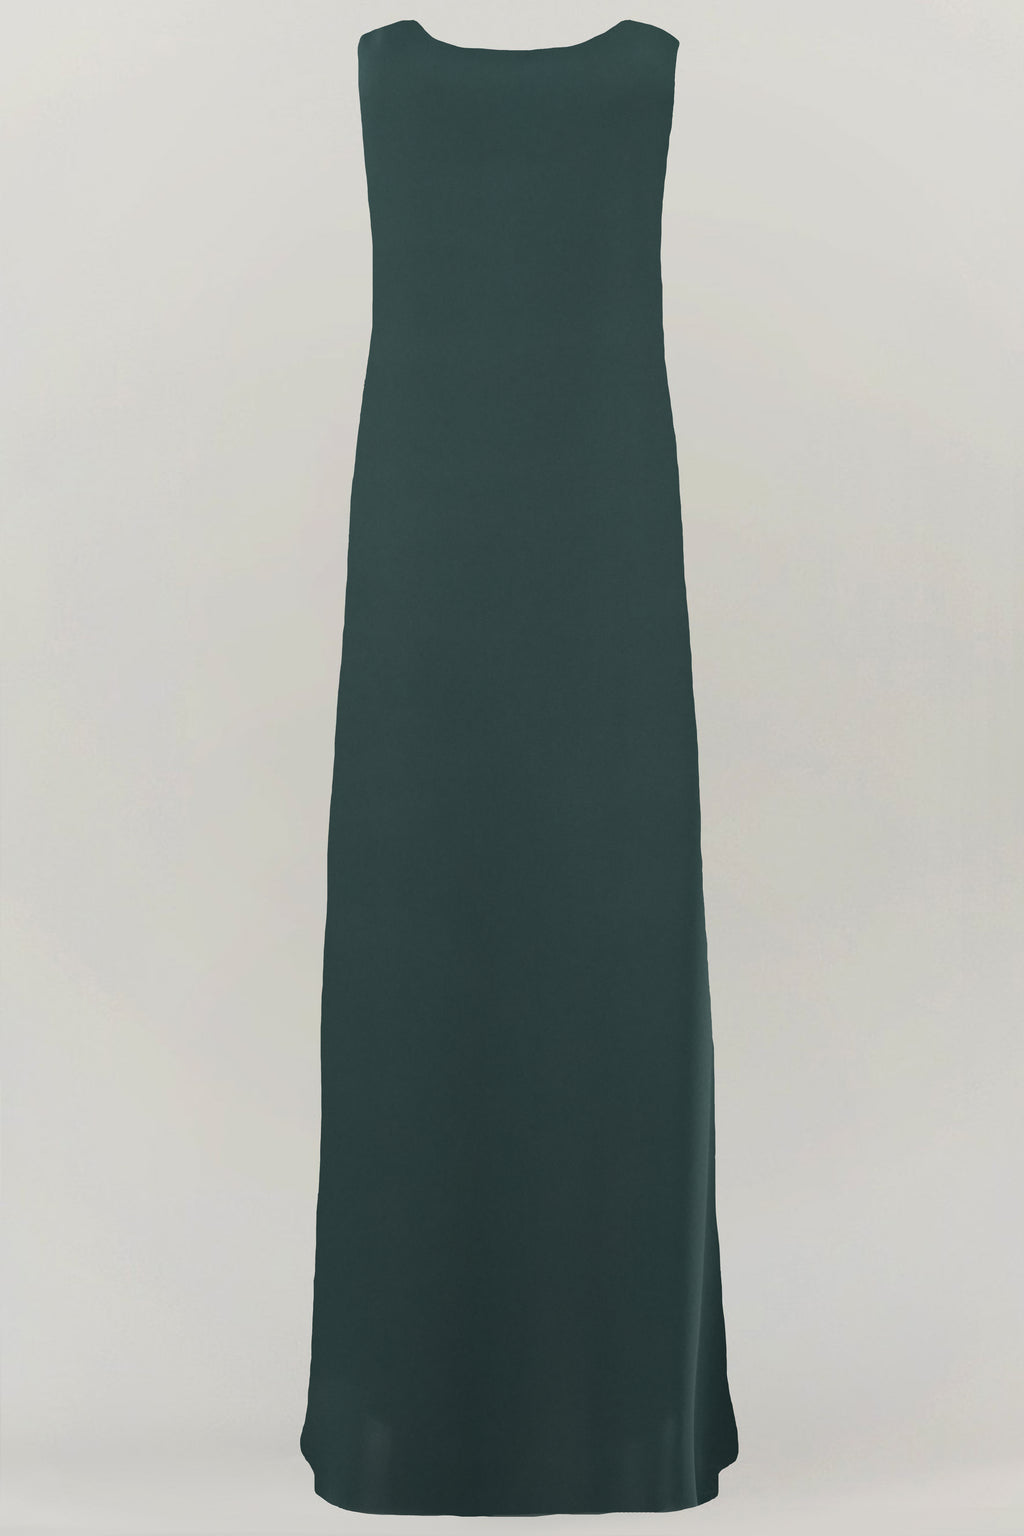 thowby-online-dubai-crepe-dress